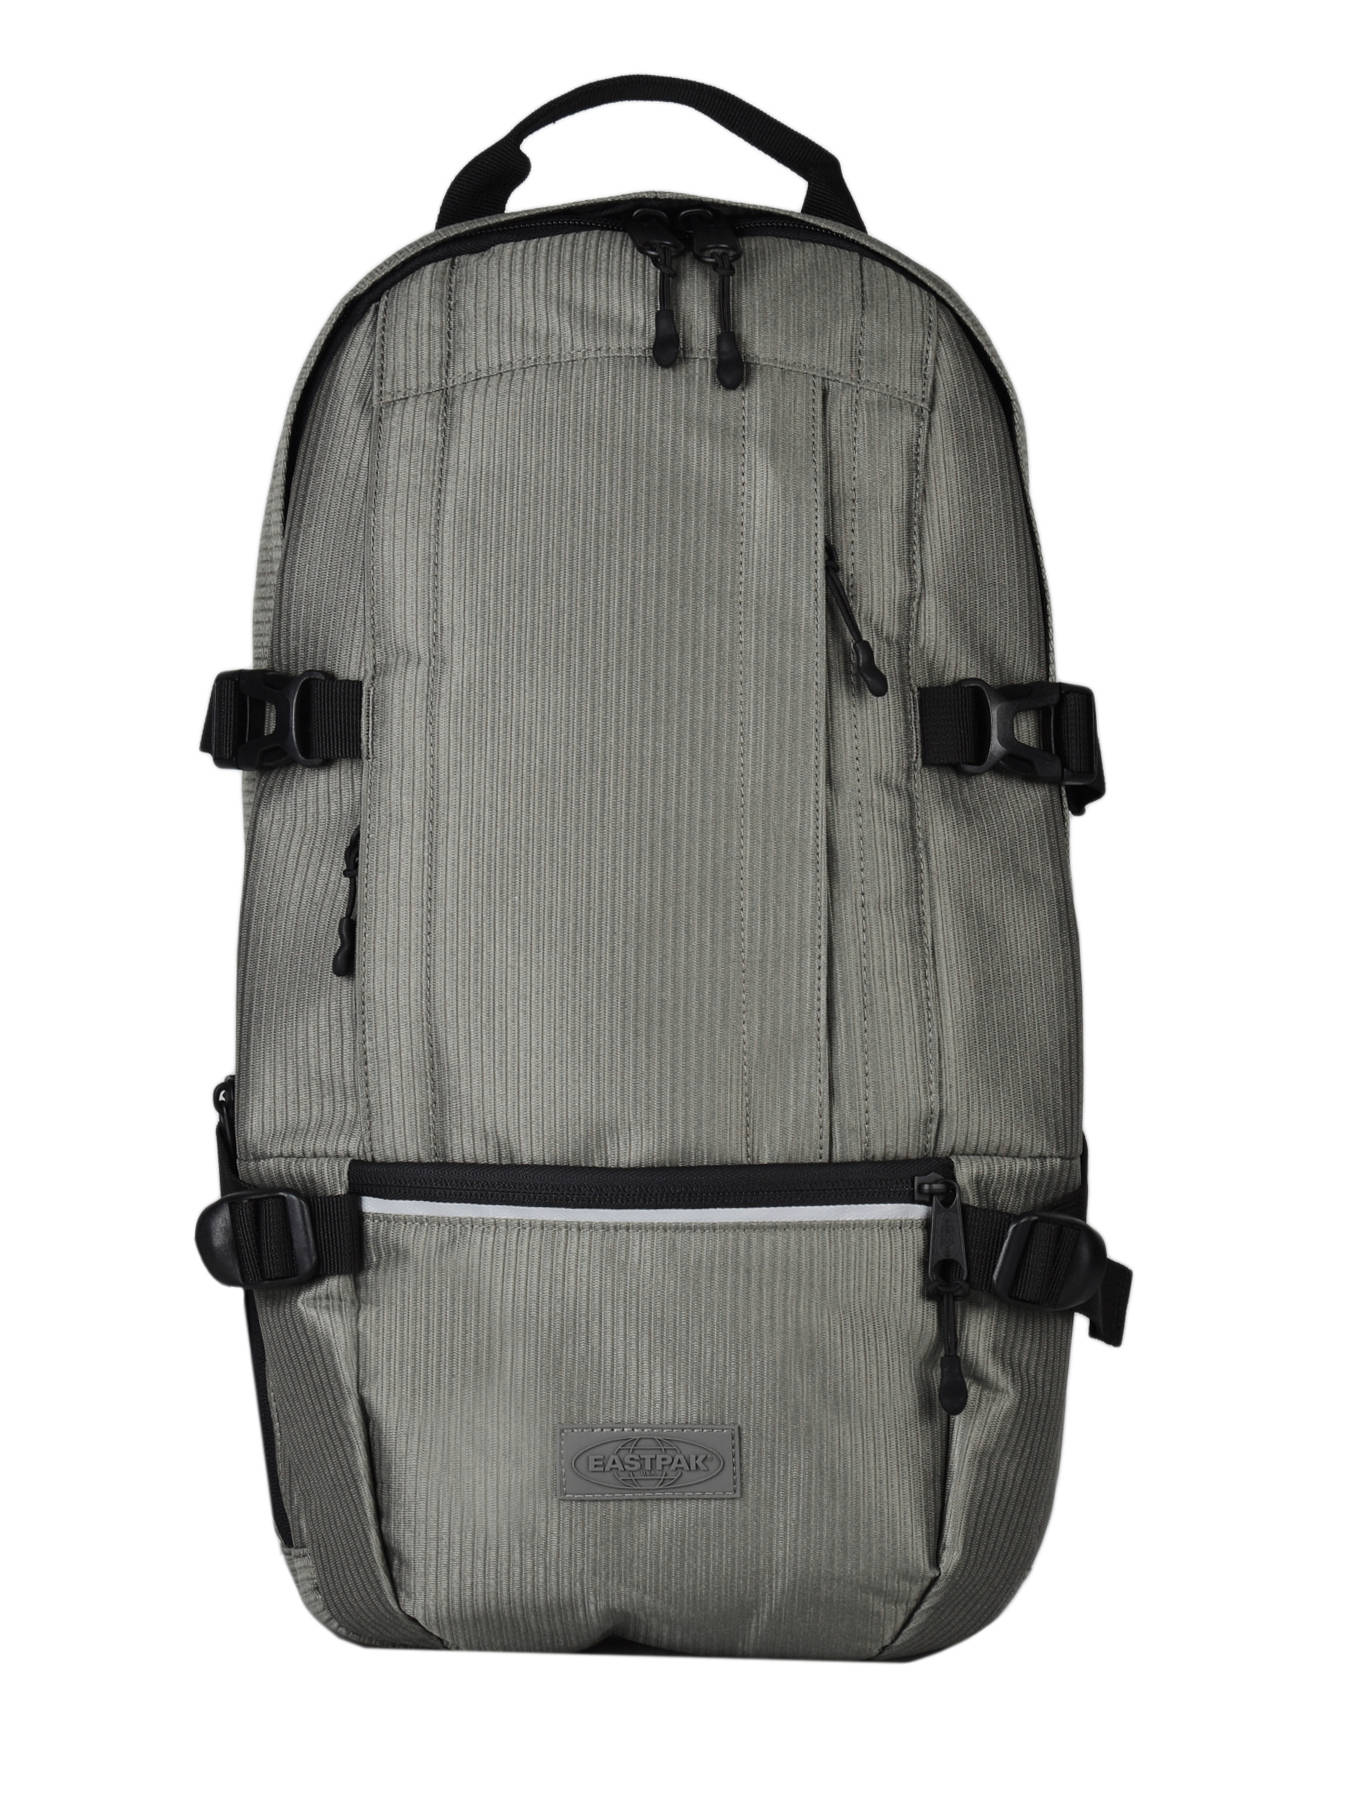 Alabama legering Ontwikkelen Eastpak Backpack FLOID.PBG - free shipping available